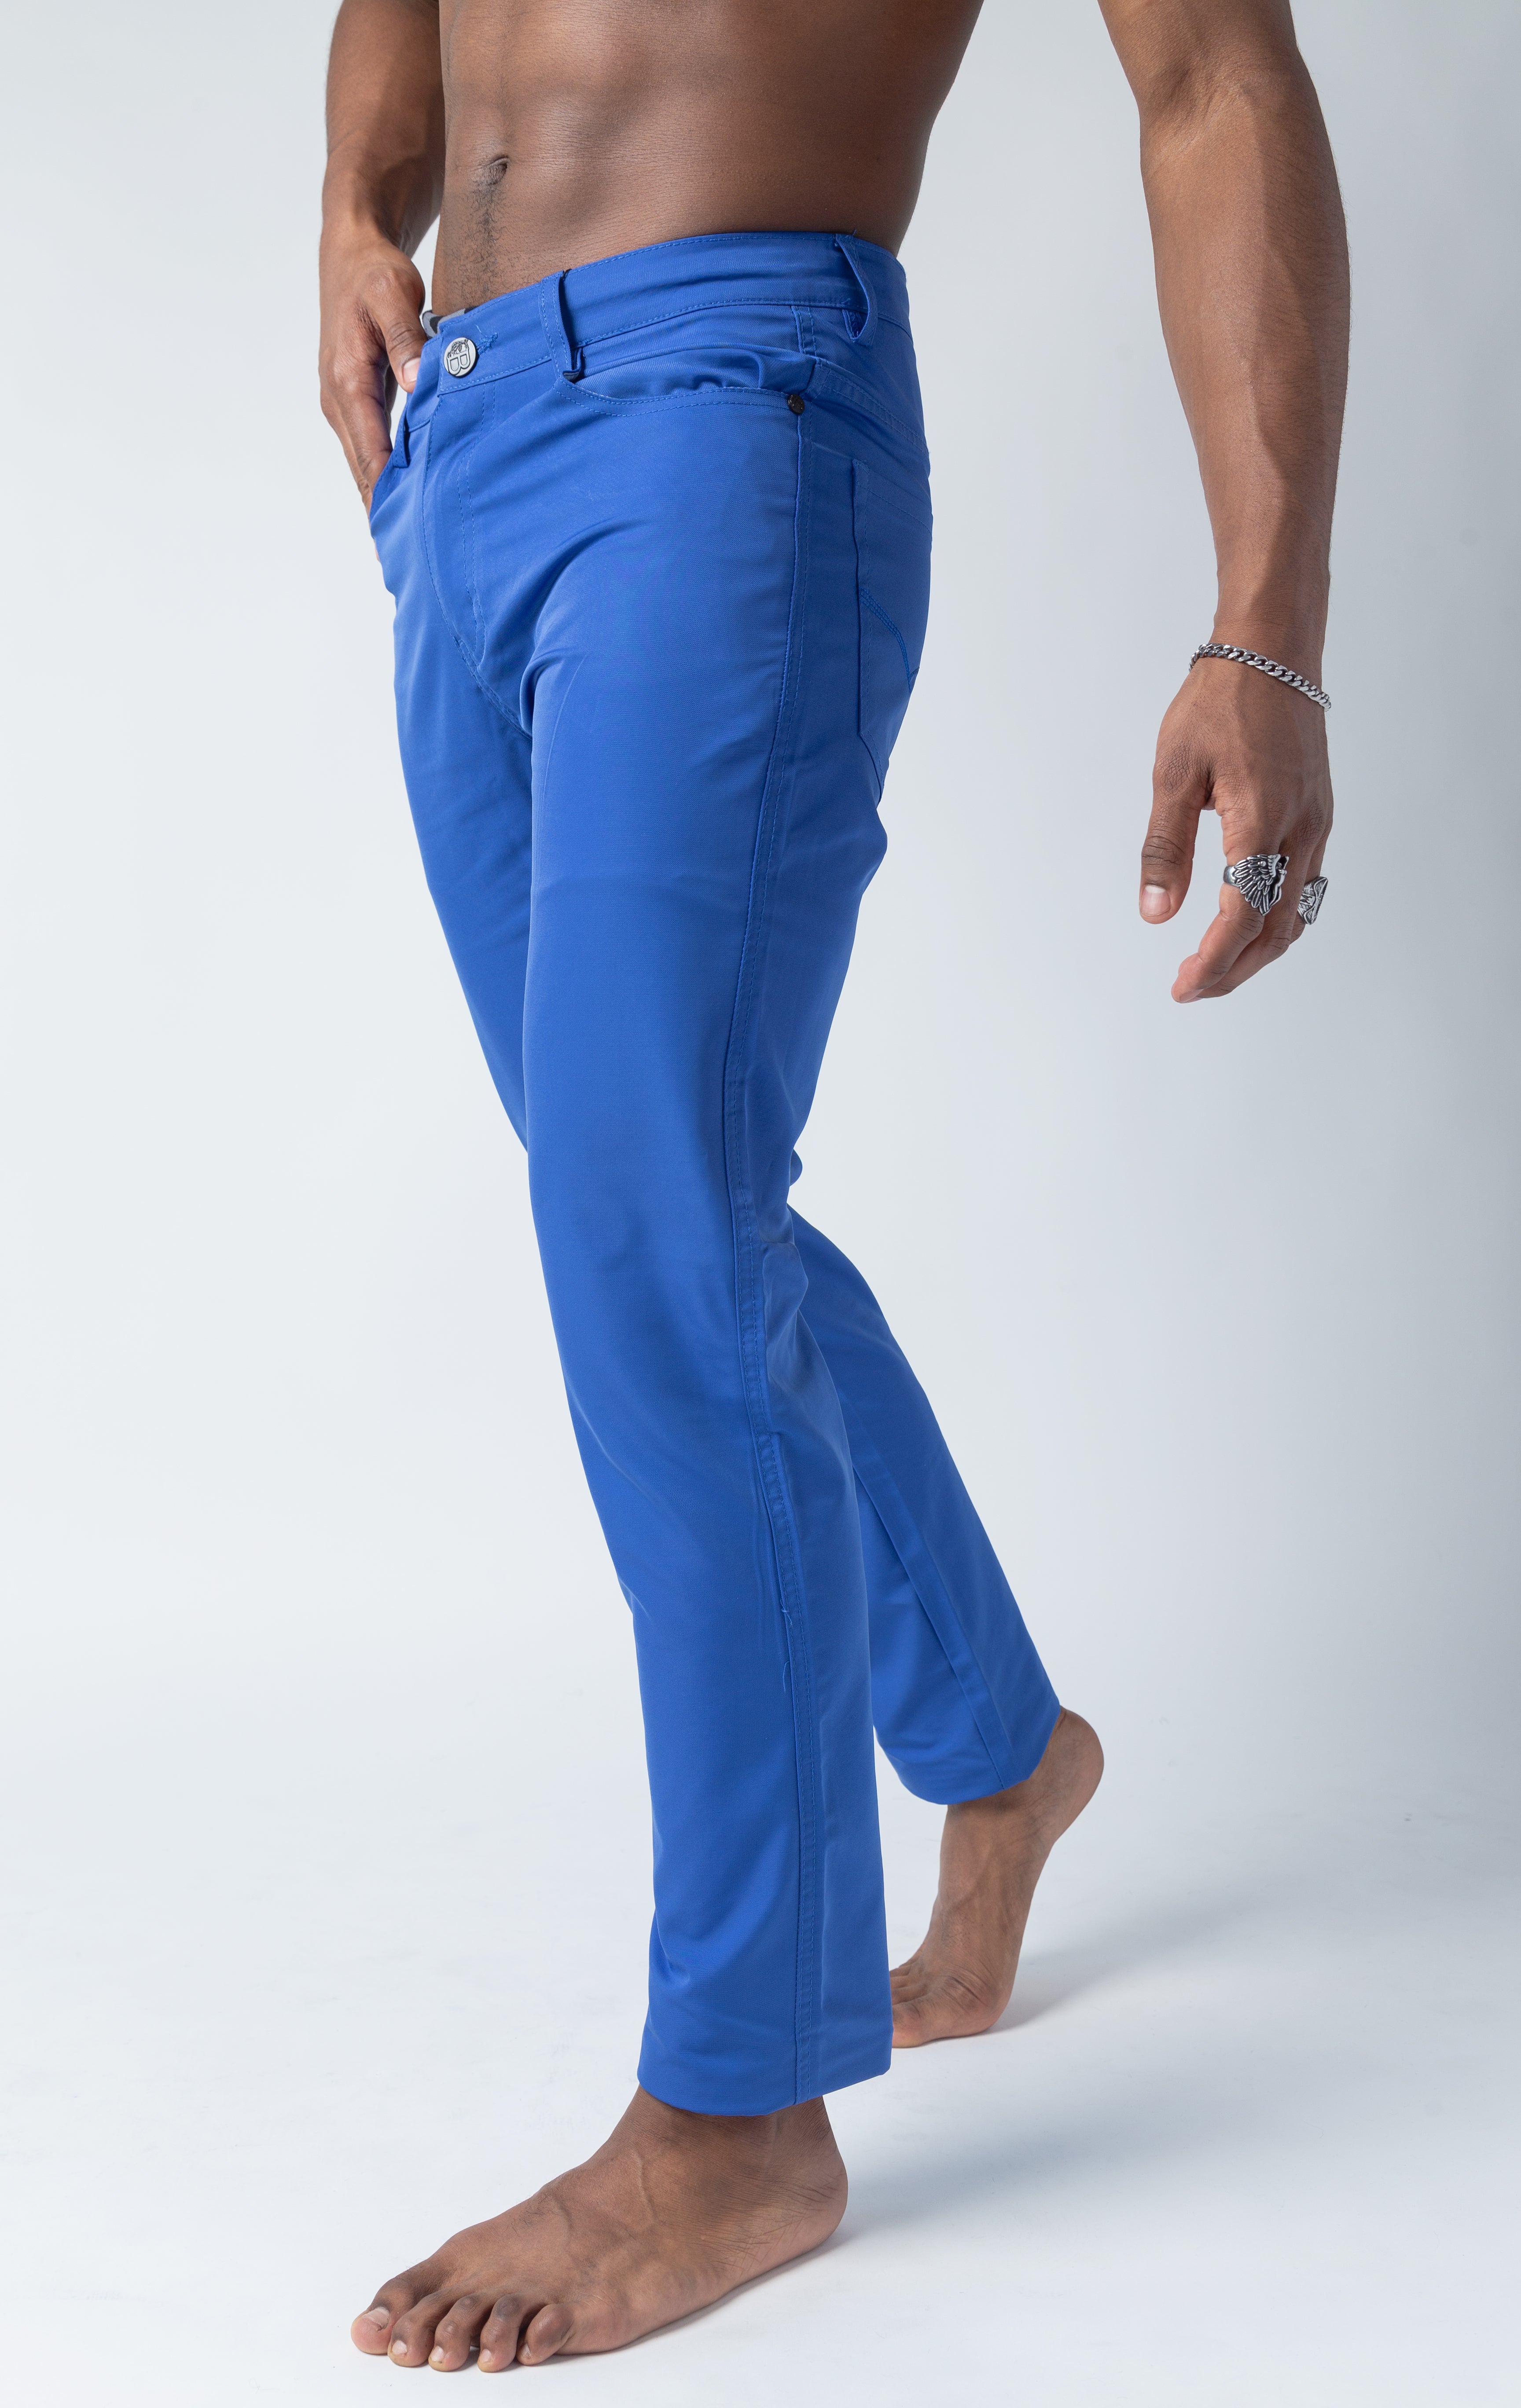 Royal blue pants for men